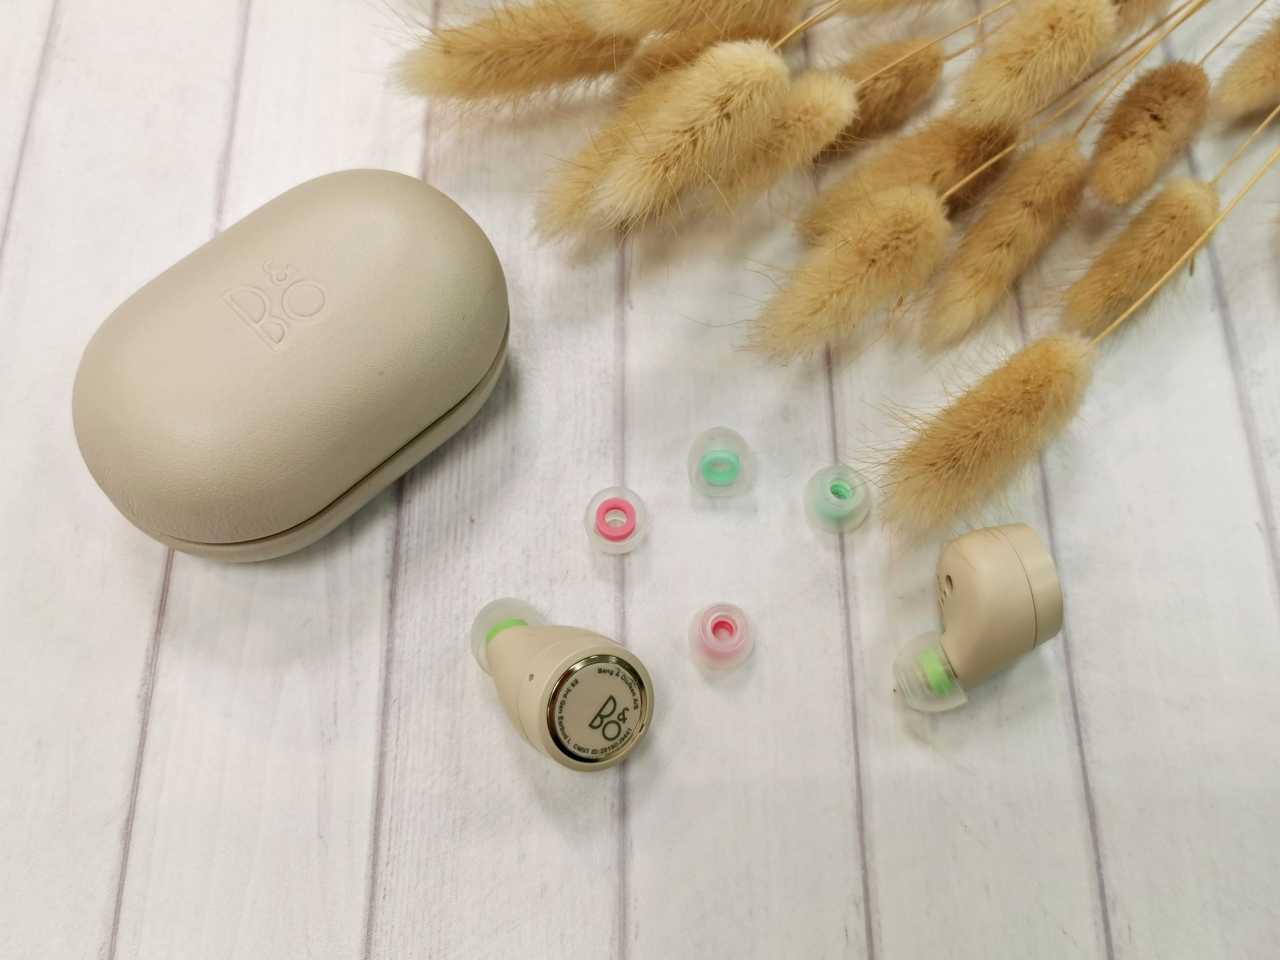 SpinFit CP360 矽膠耳塞，讓耳塞更貼合耳道，有效阻隔外部噪音減少內部聲音流失，讓音樂更好聽